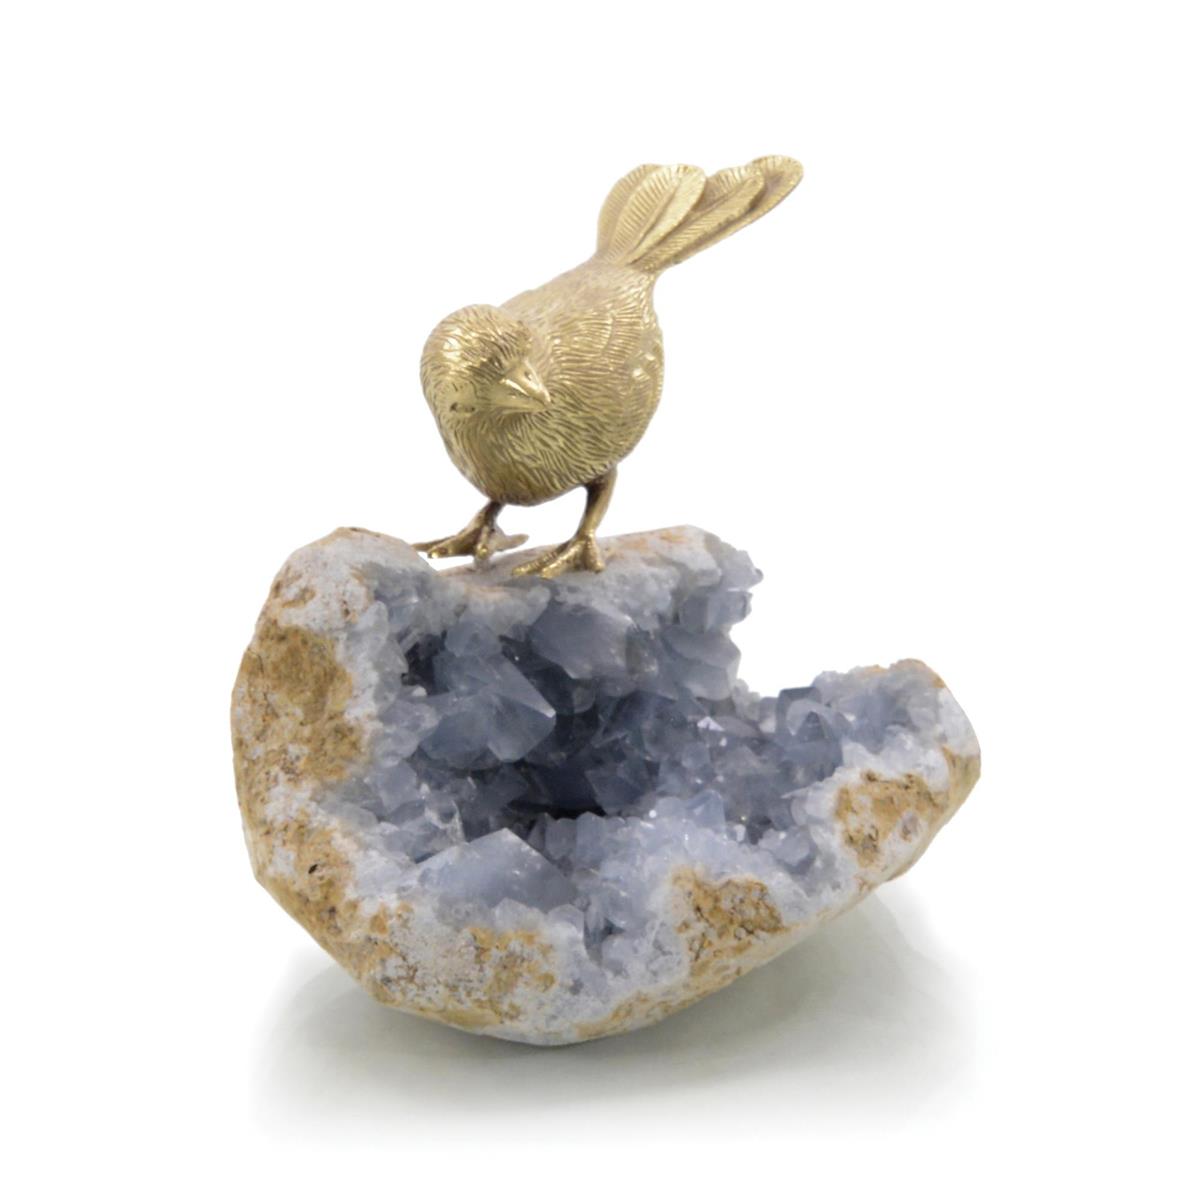 Bird On Celestite Rock-John Richard-JR-JRA-11625-Decorative ObjectsII-2-France and Son